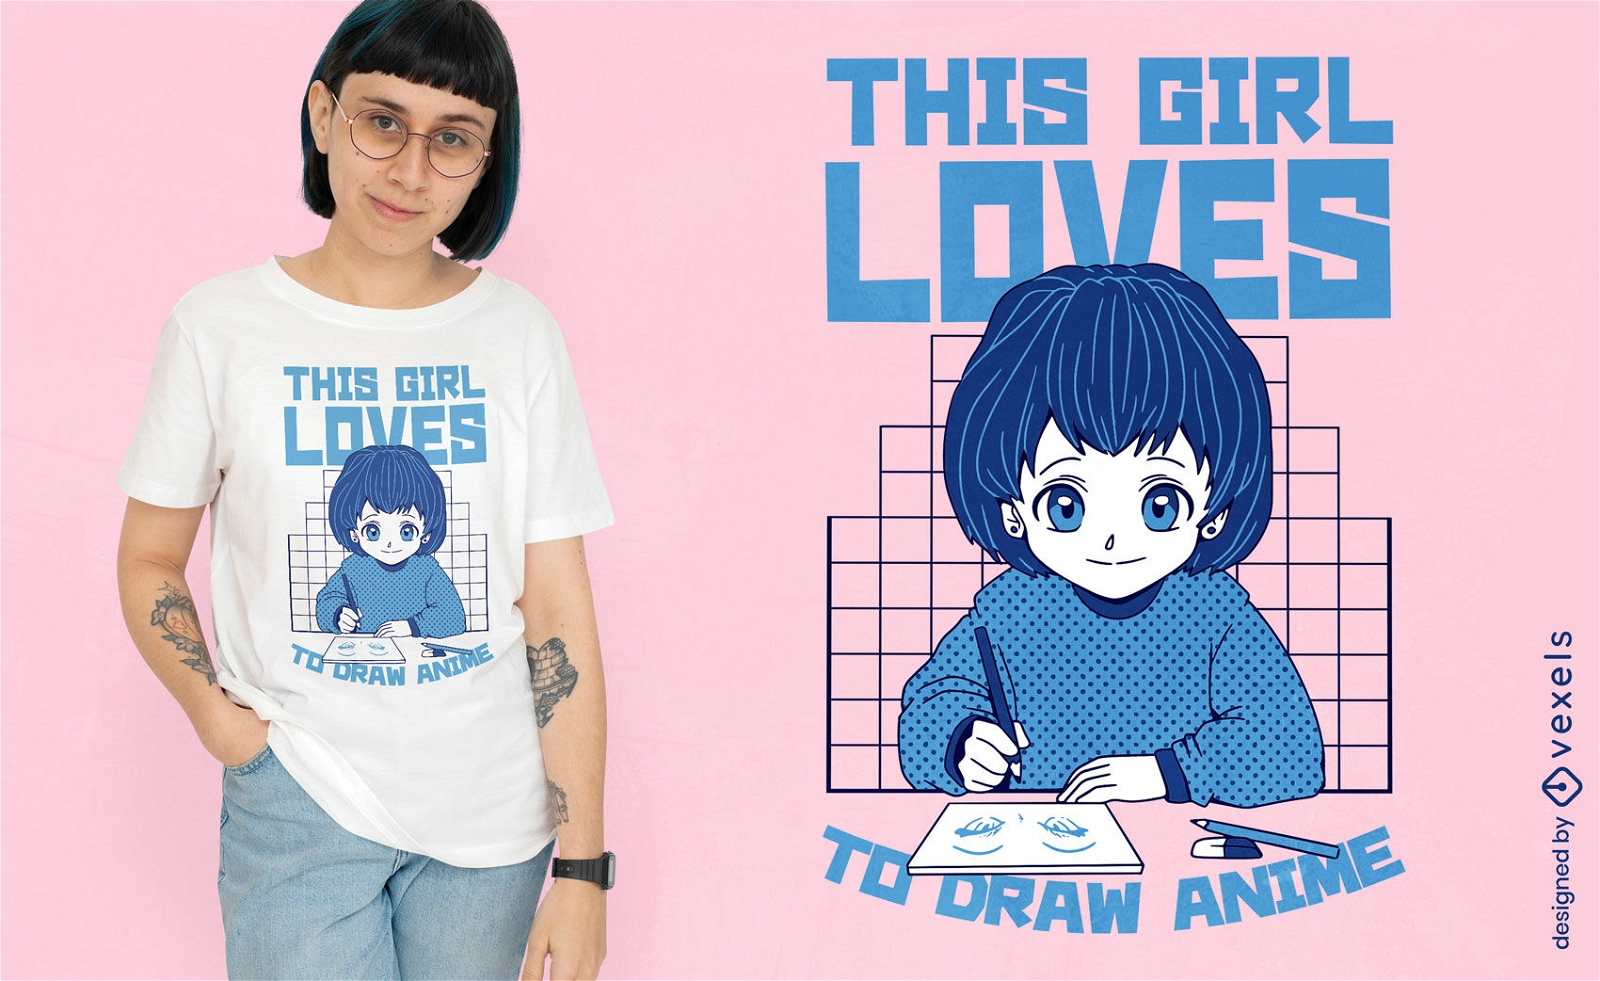 how to draw anime girl shirts